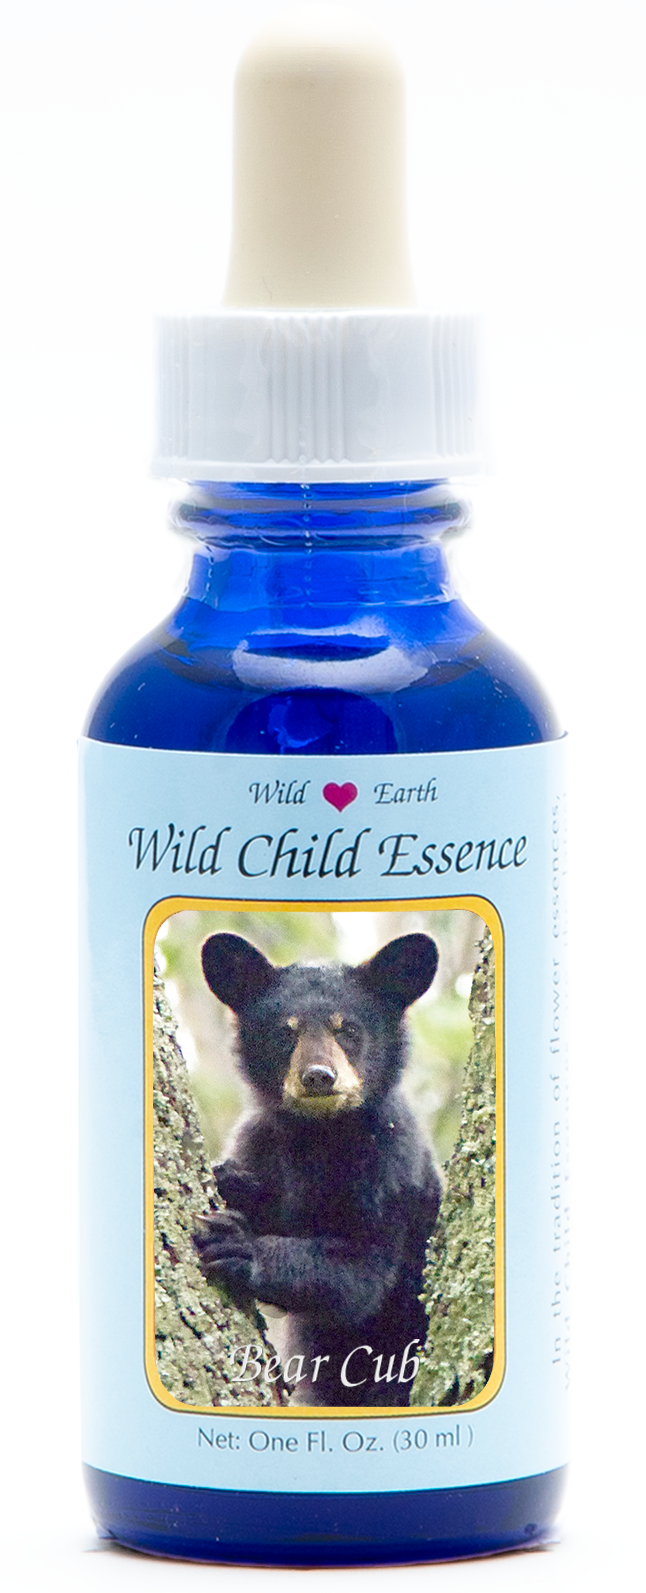 Bear cub animal essence 30ml